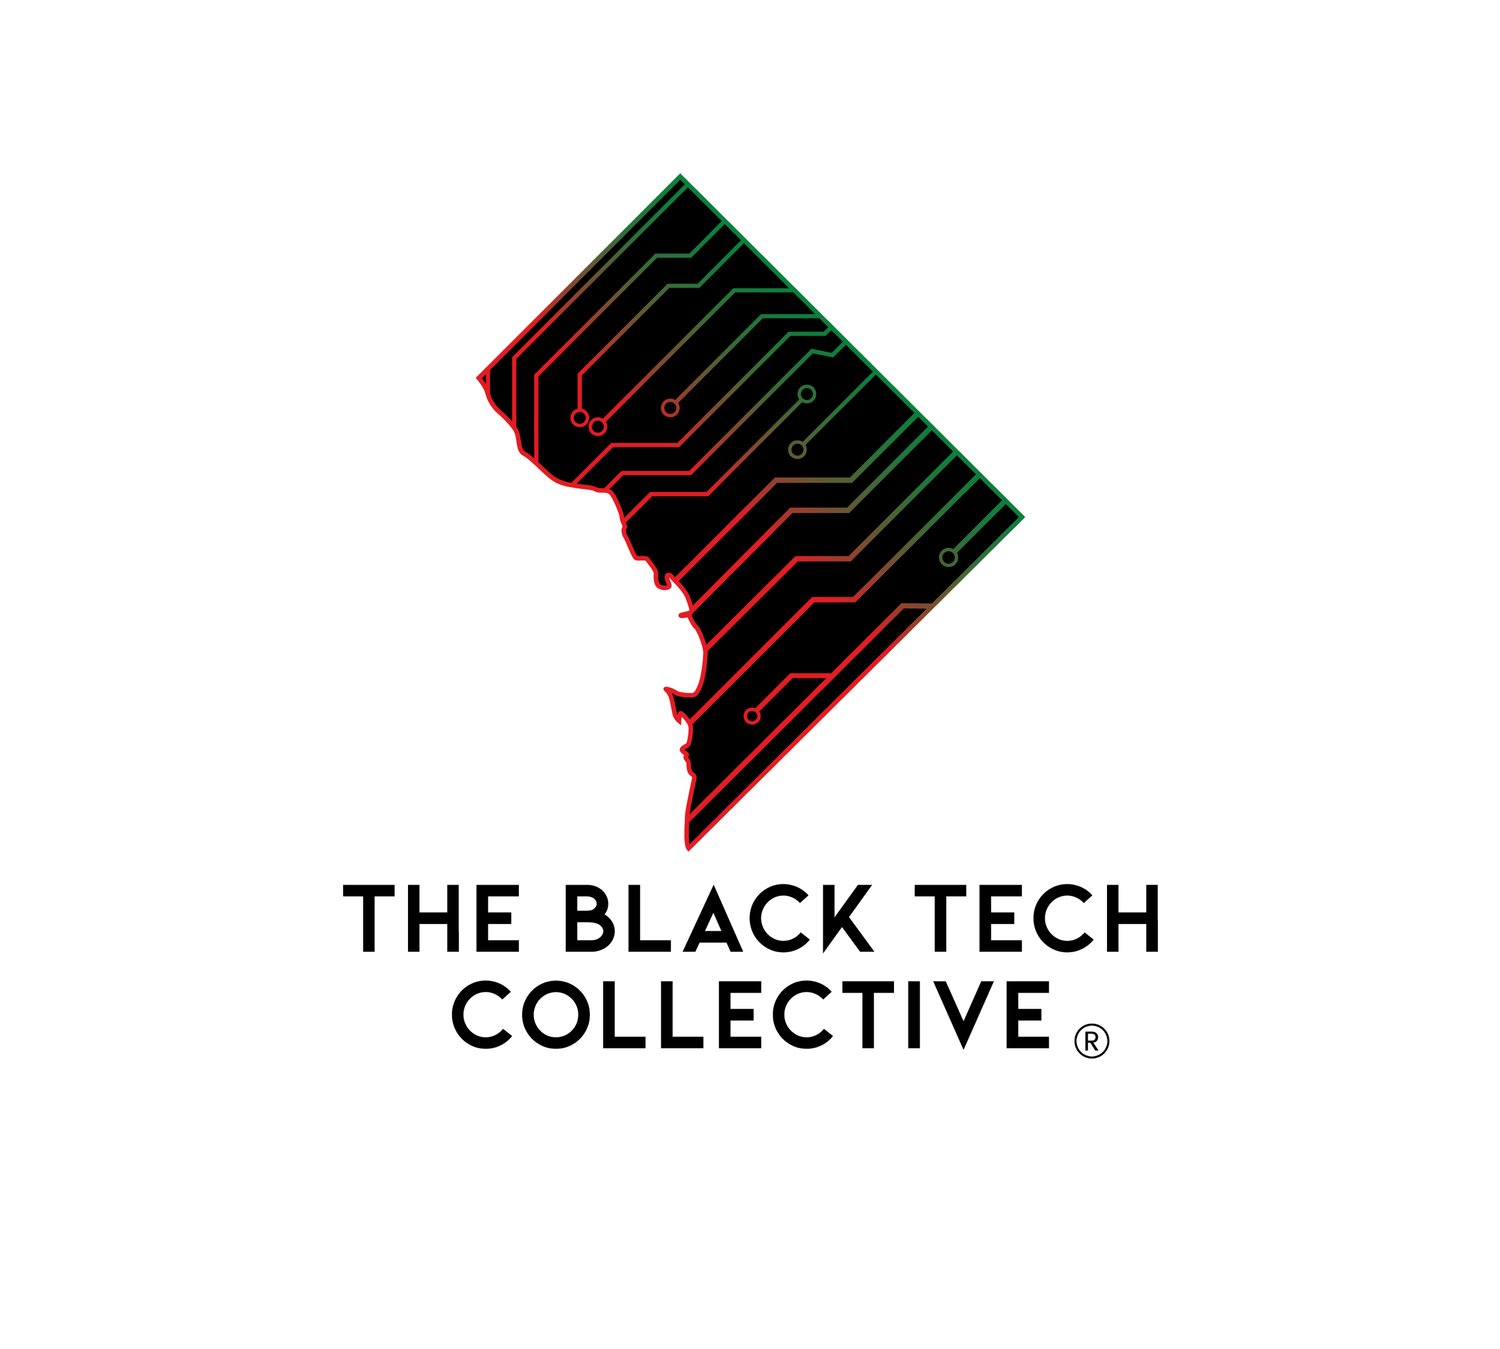 The Black Tech Collective